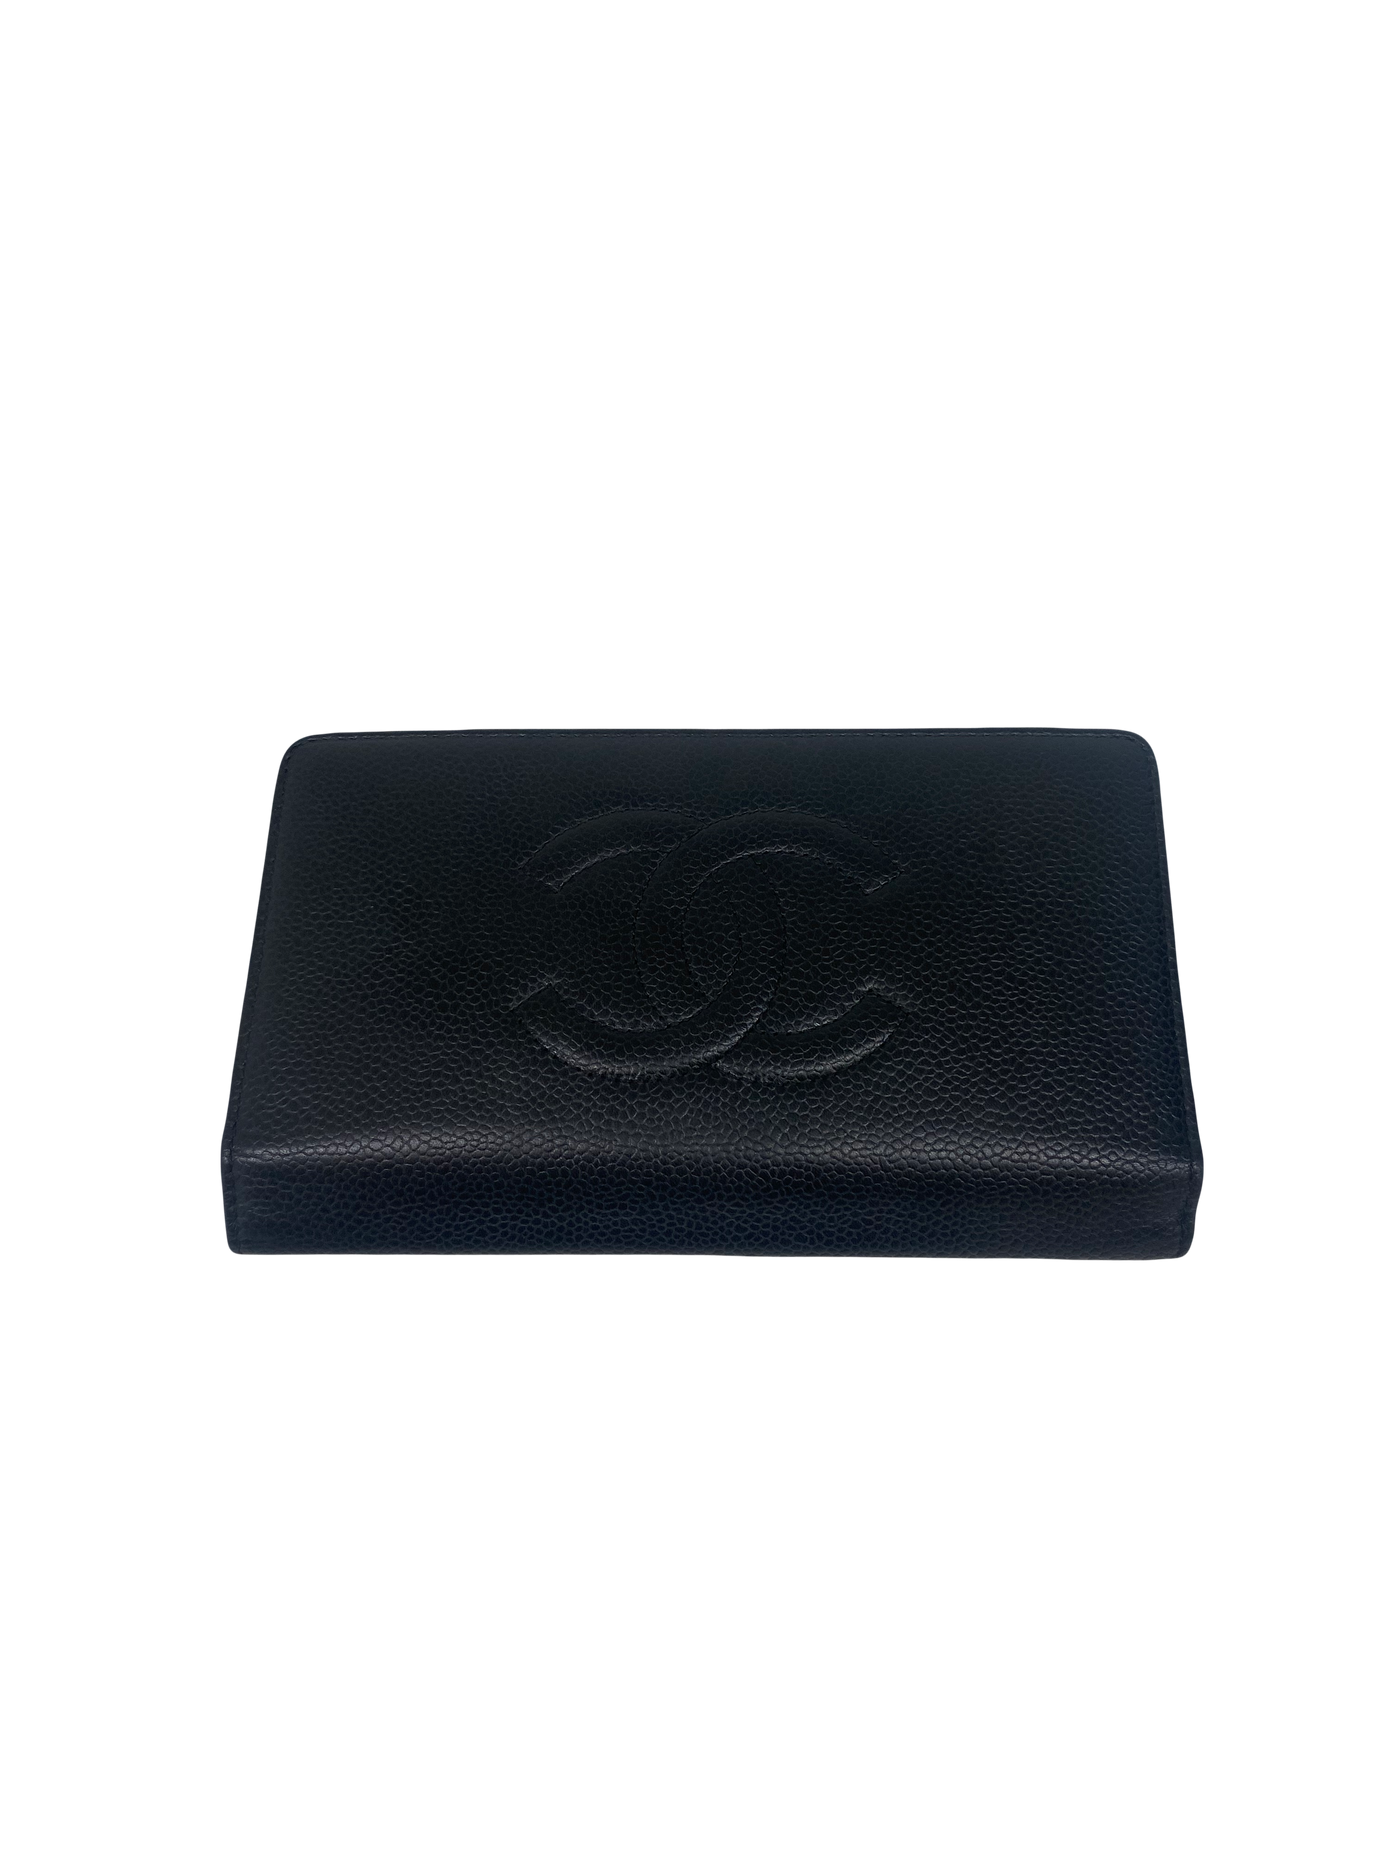 Chanel Black Caviar Flap Wallet